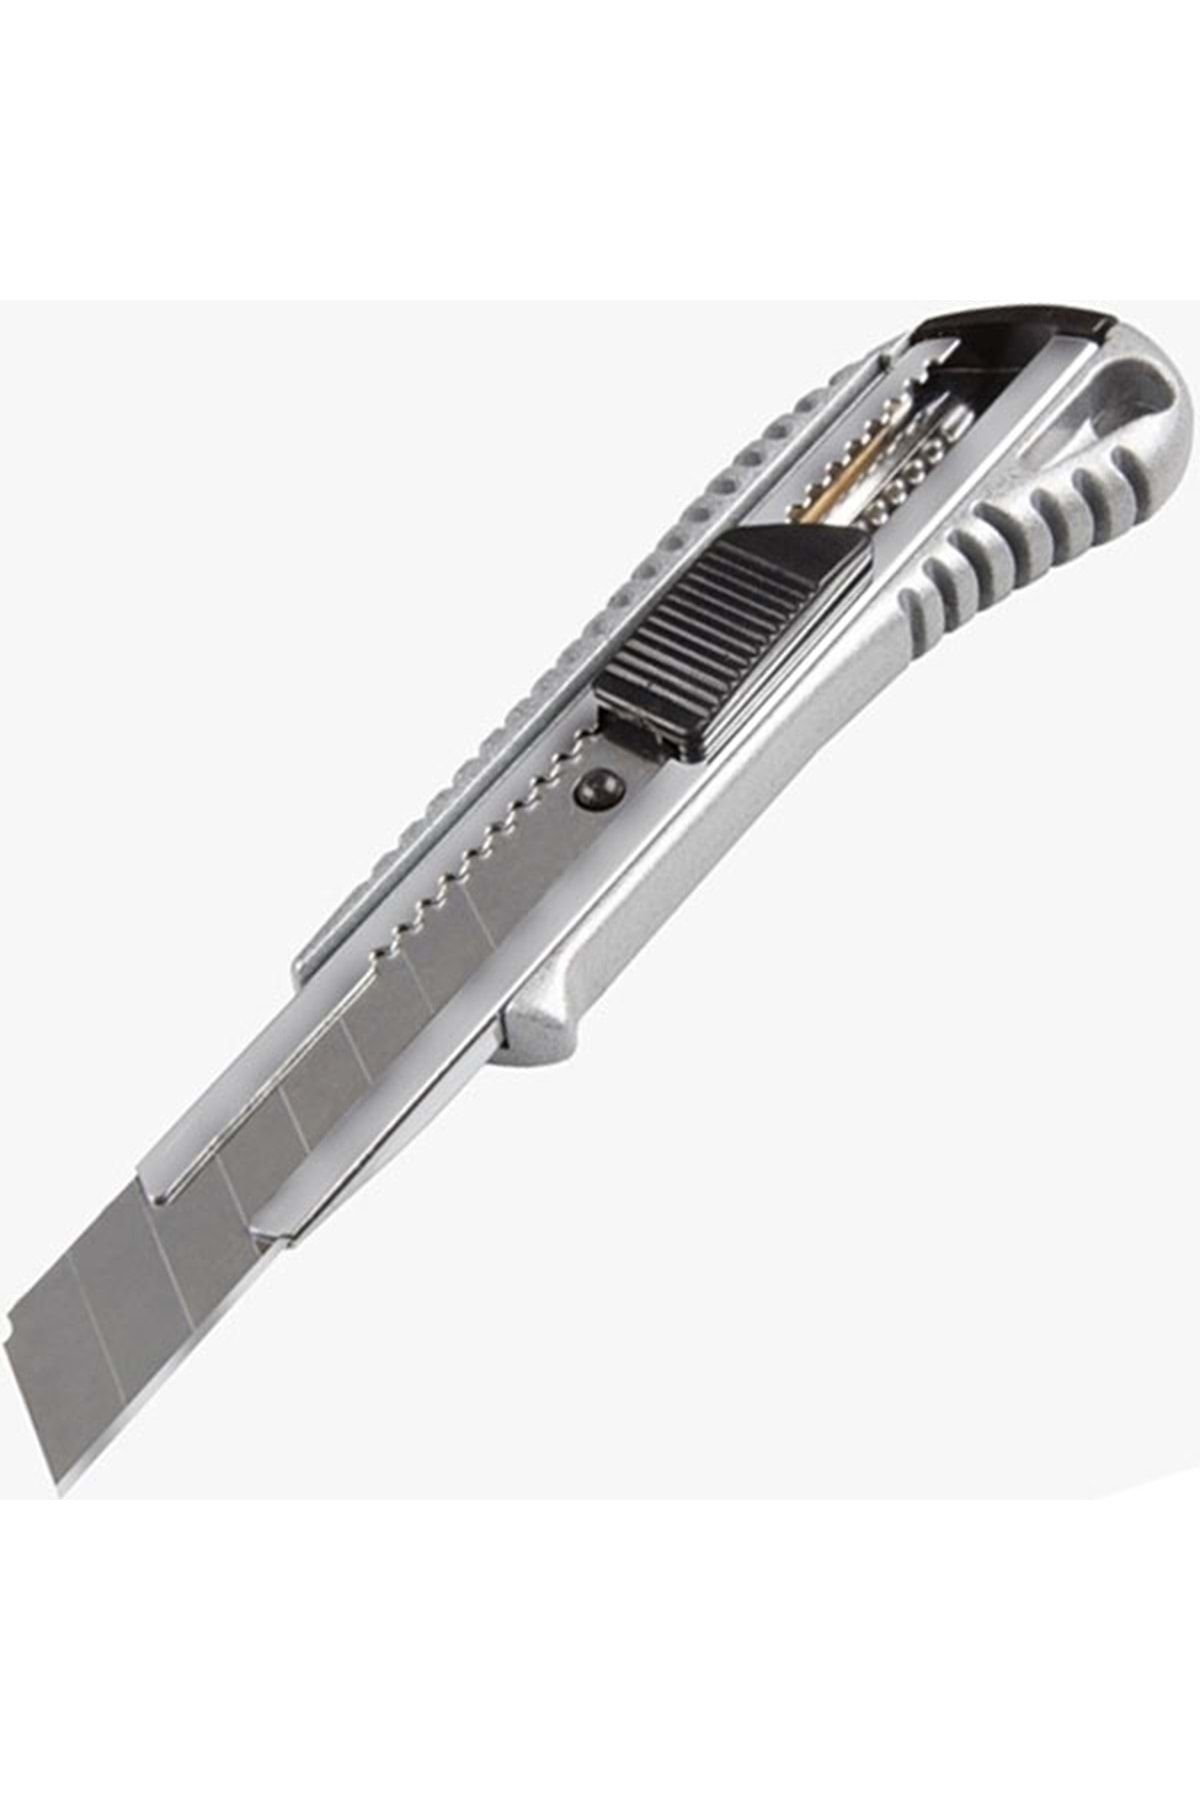 SWAR Swr-1992 18mm X 0,5mm Aüminyum Gövde Metal Maket Bıçağı